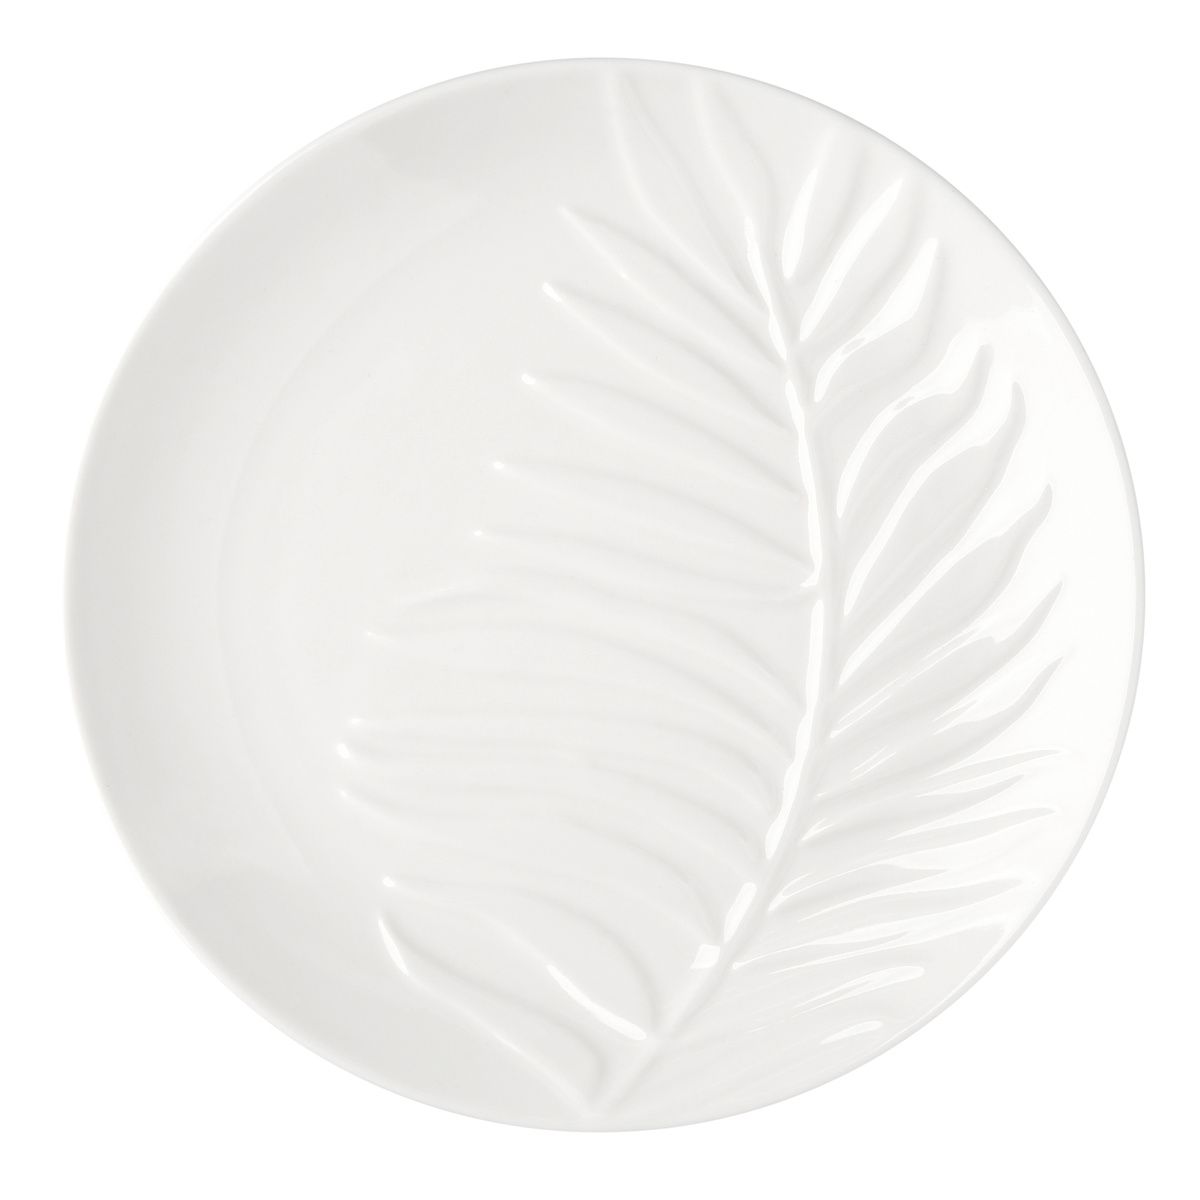 Altom Porcelánový dezertní talíř Tropical, 20 cm, bílá - 4home.cz